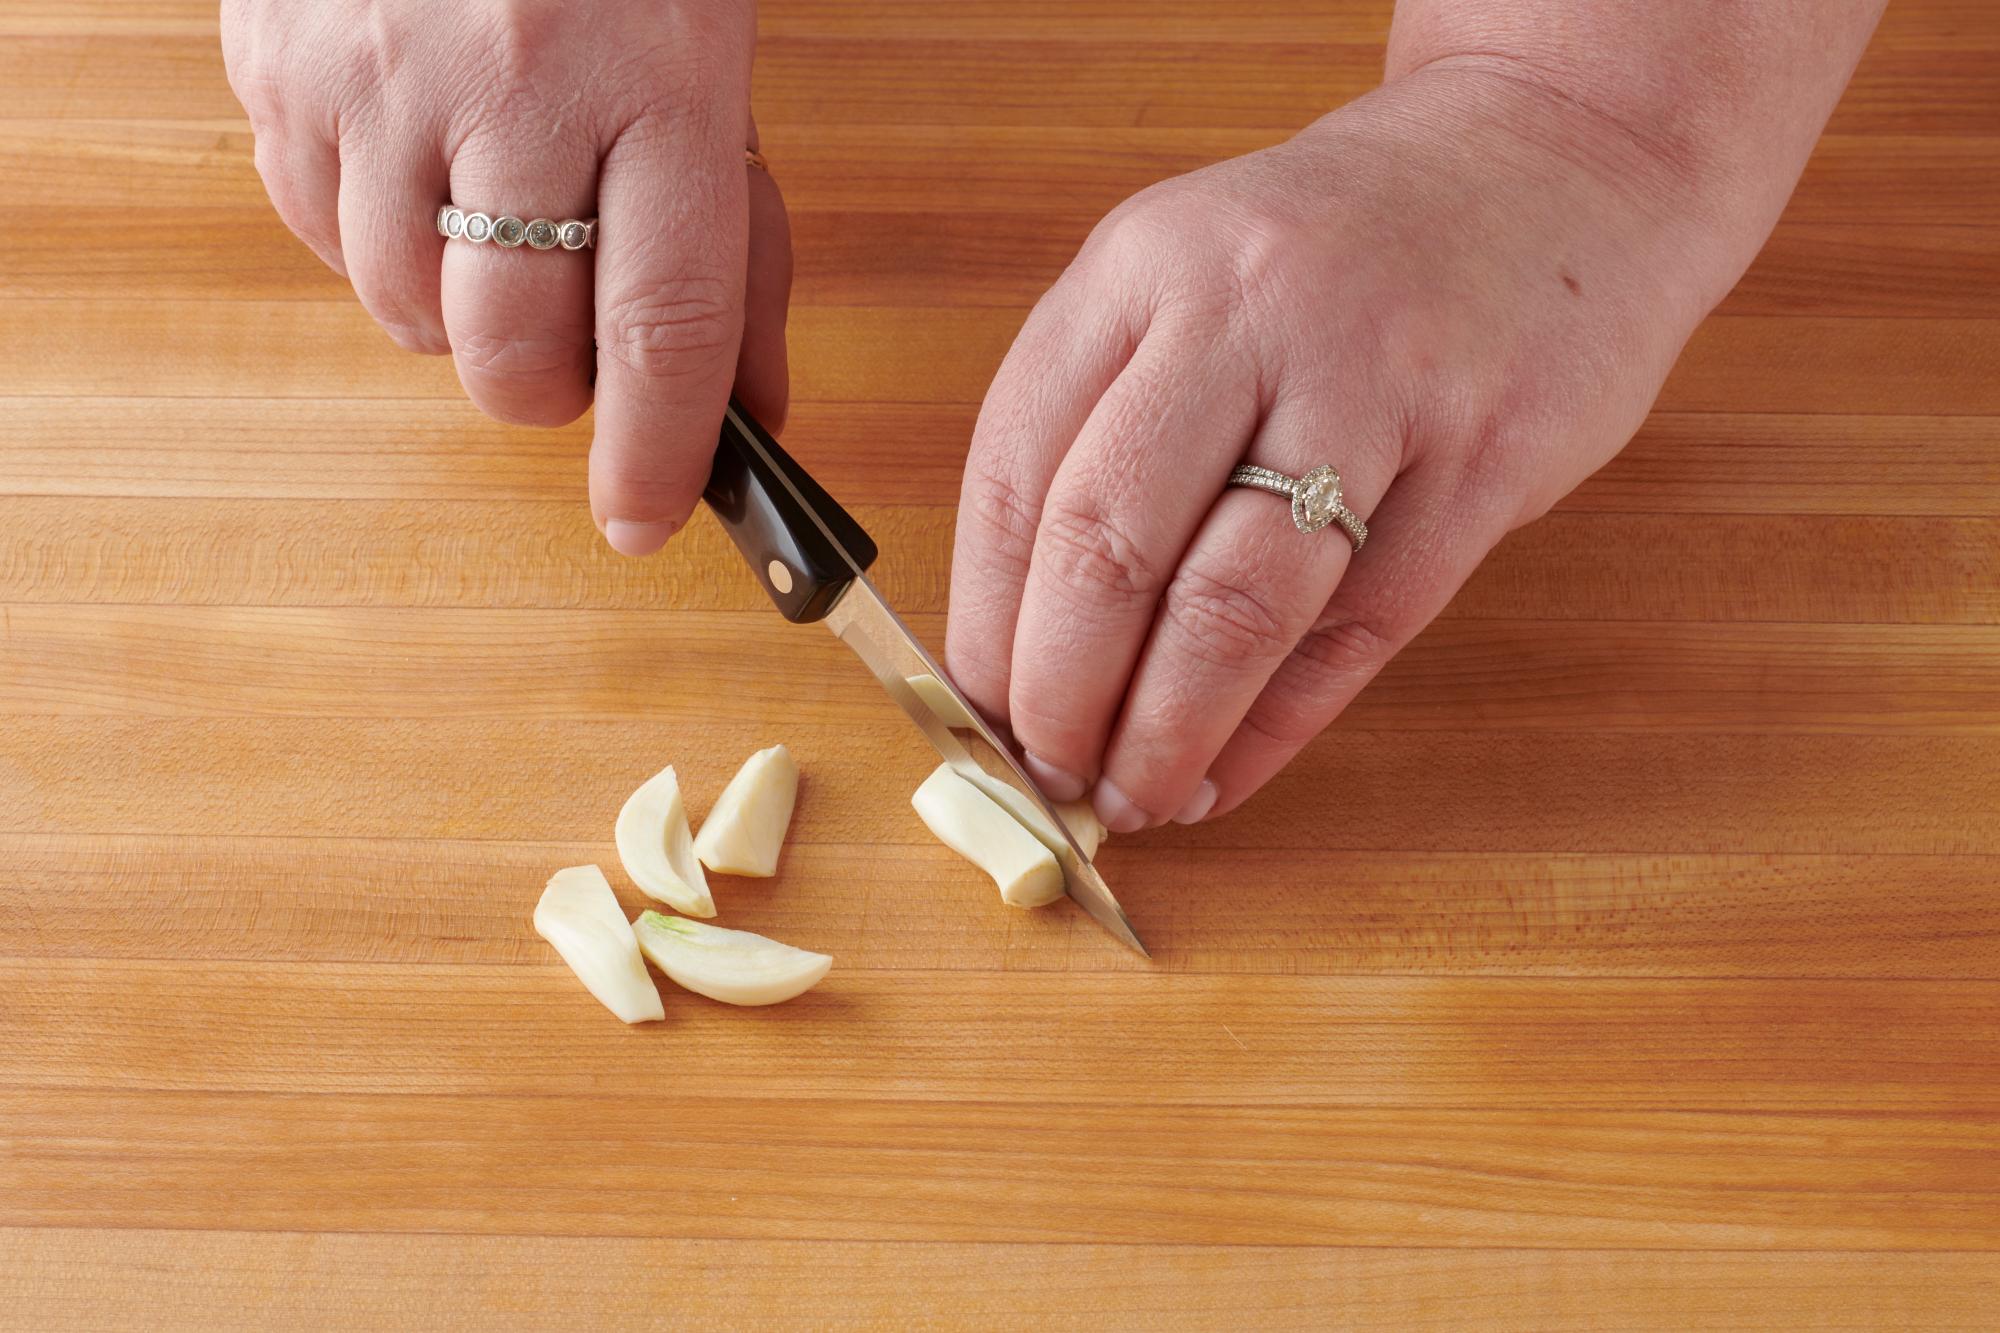 Cutting garlic with a Paring Knife.